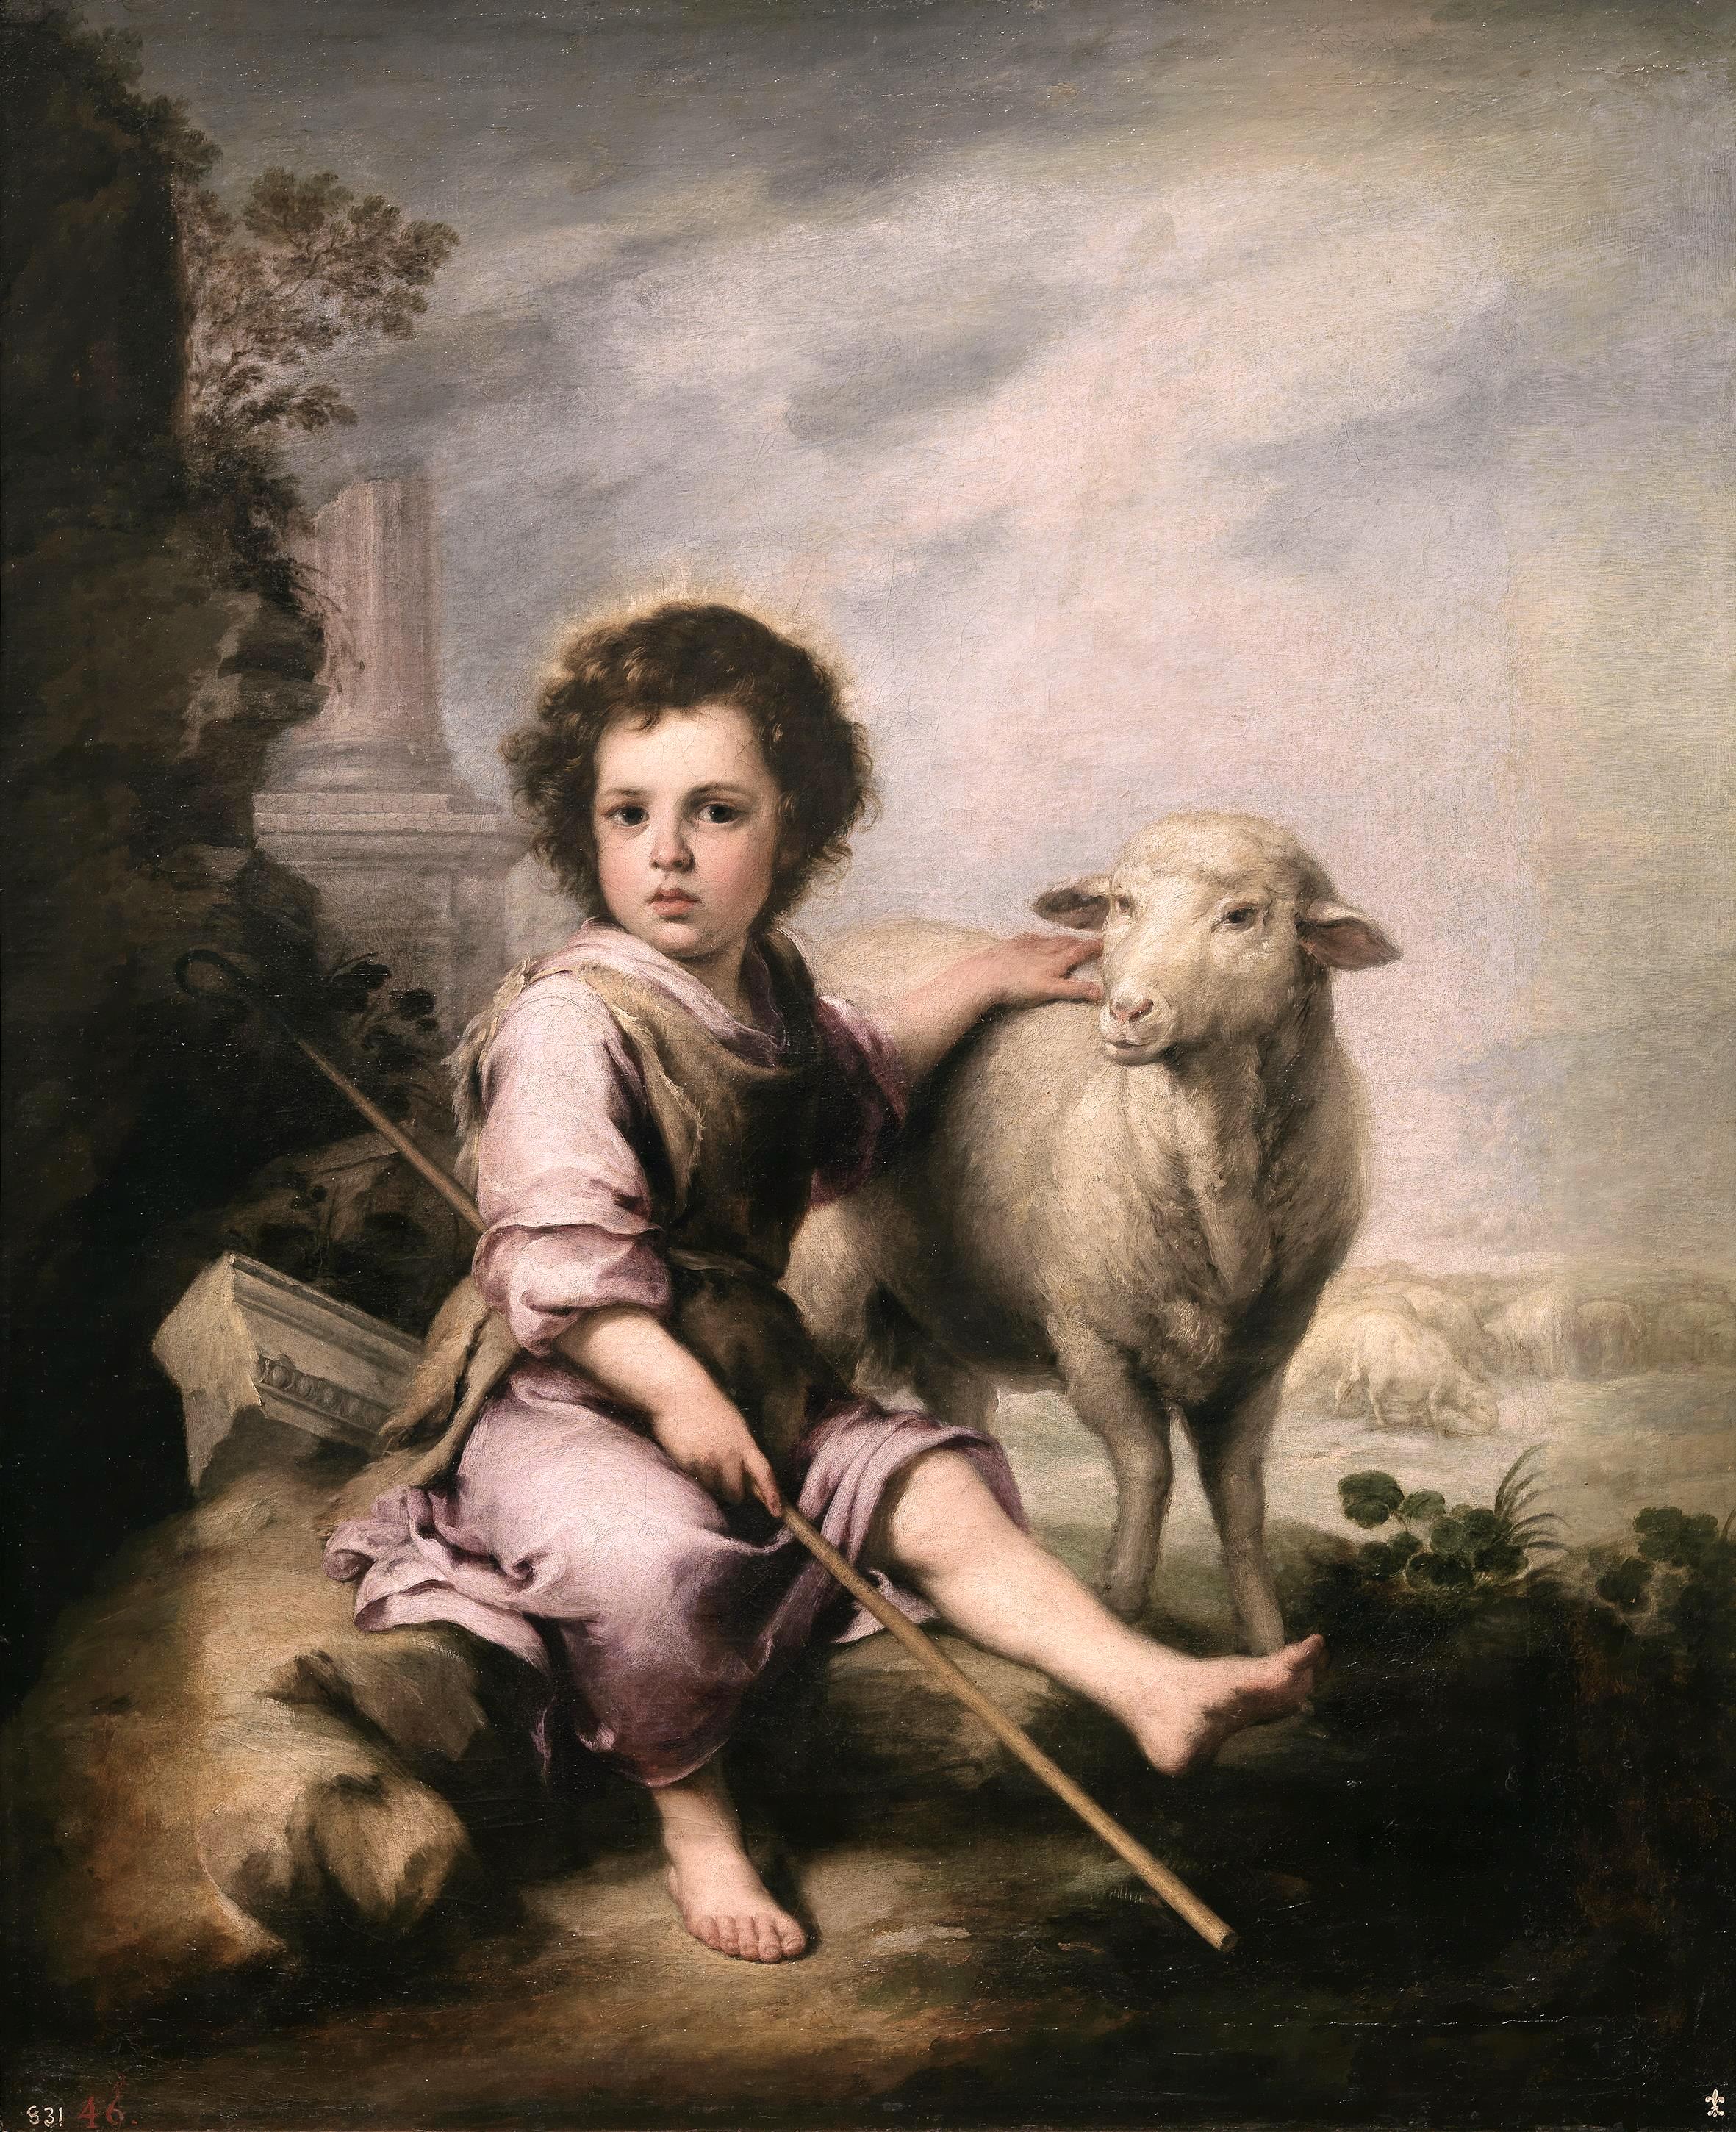 El Buen Pastor - The Good Shepherd, painted by Bartolomé Esteban Murillo (1617–1682) circa 1660 - one of the earliest depictions of a merino sheep